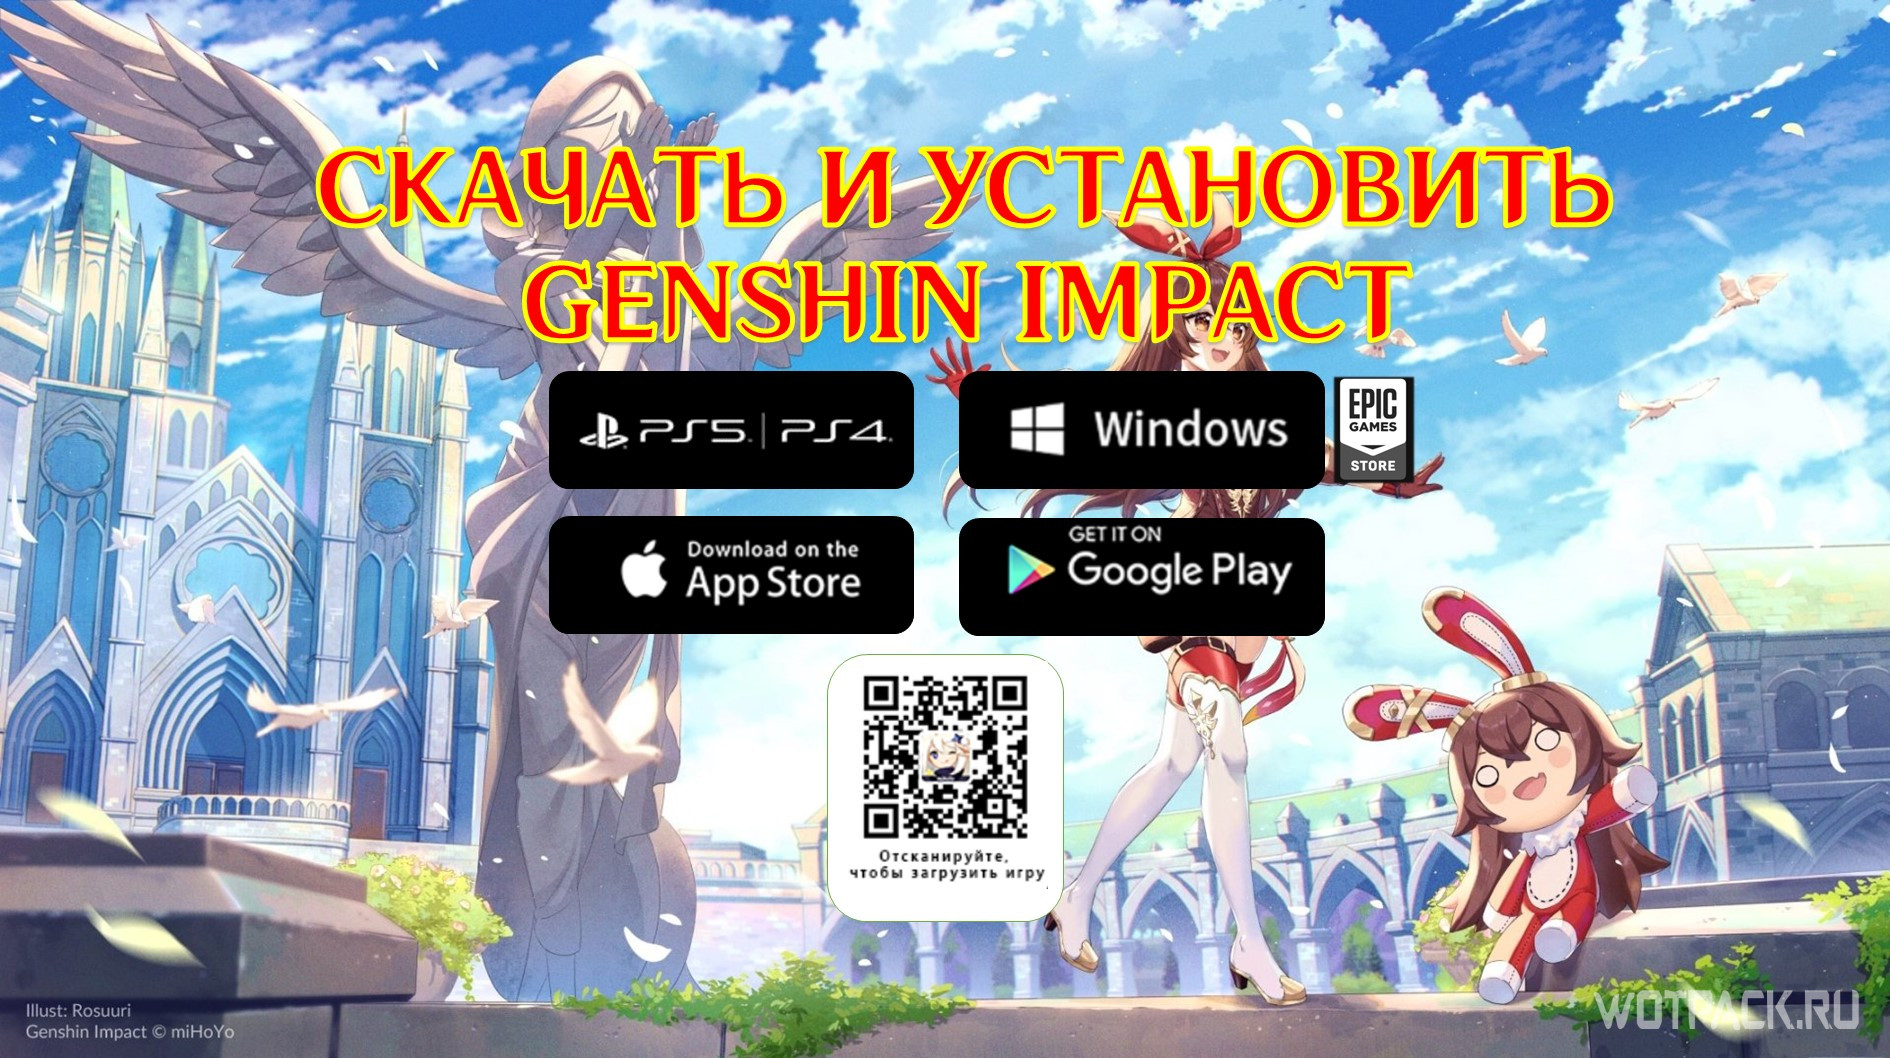 Genshin Impact – Apps no Google Play